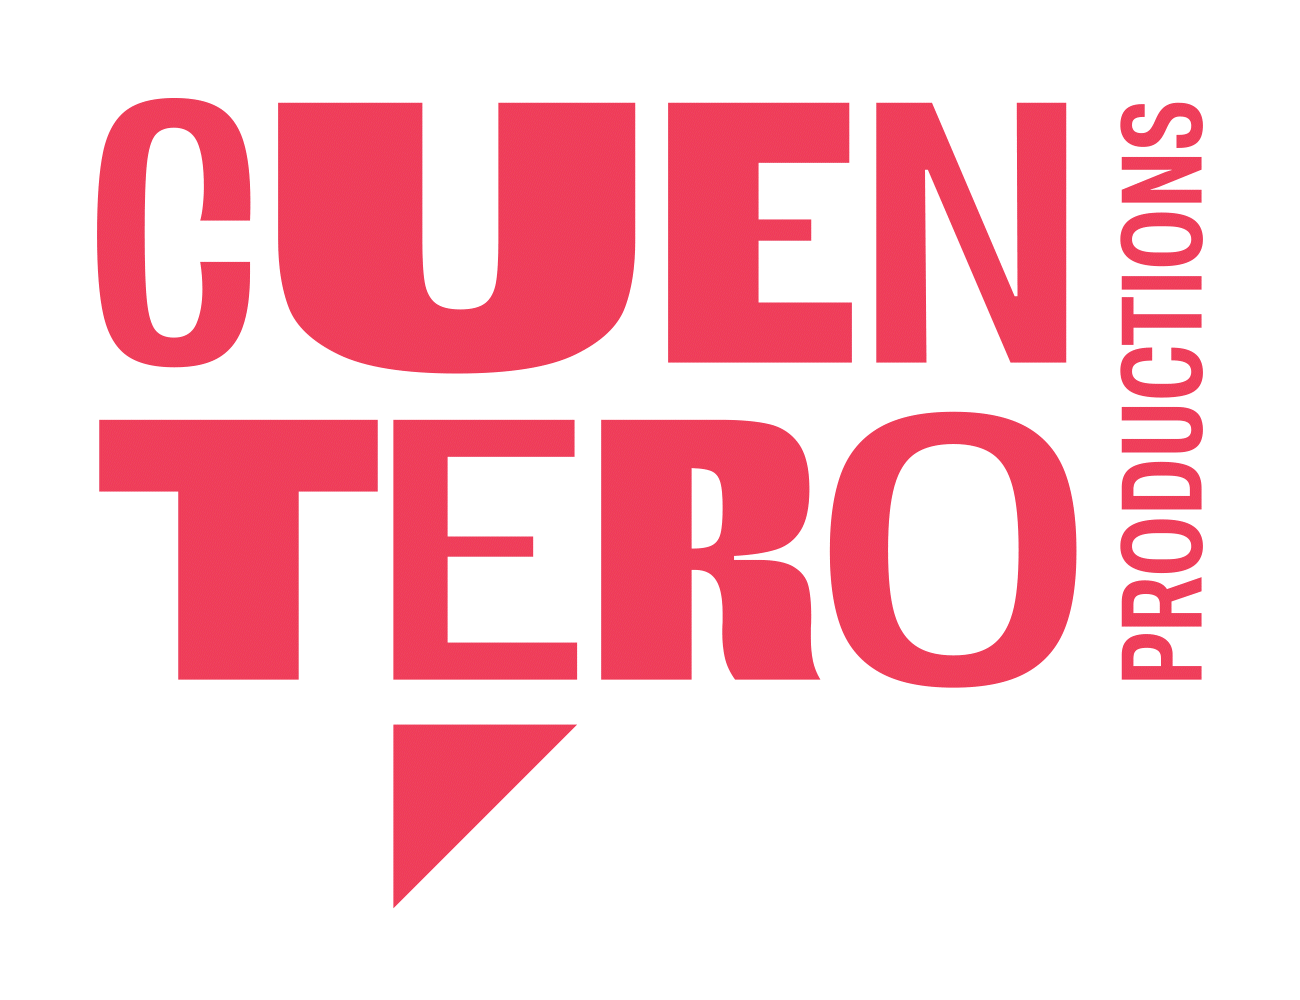 Cuentero Productions